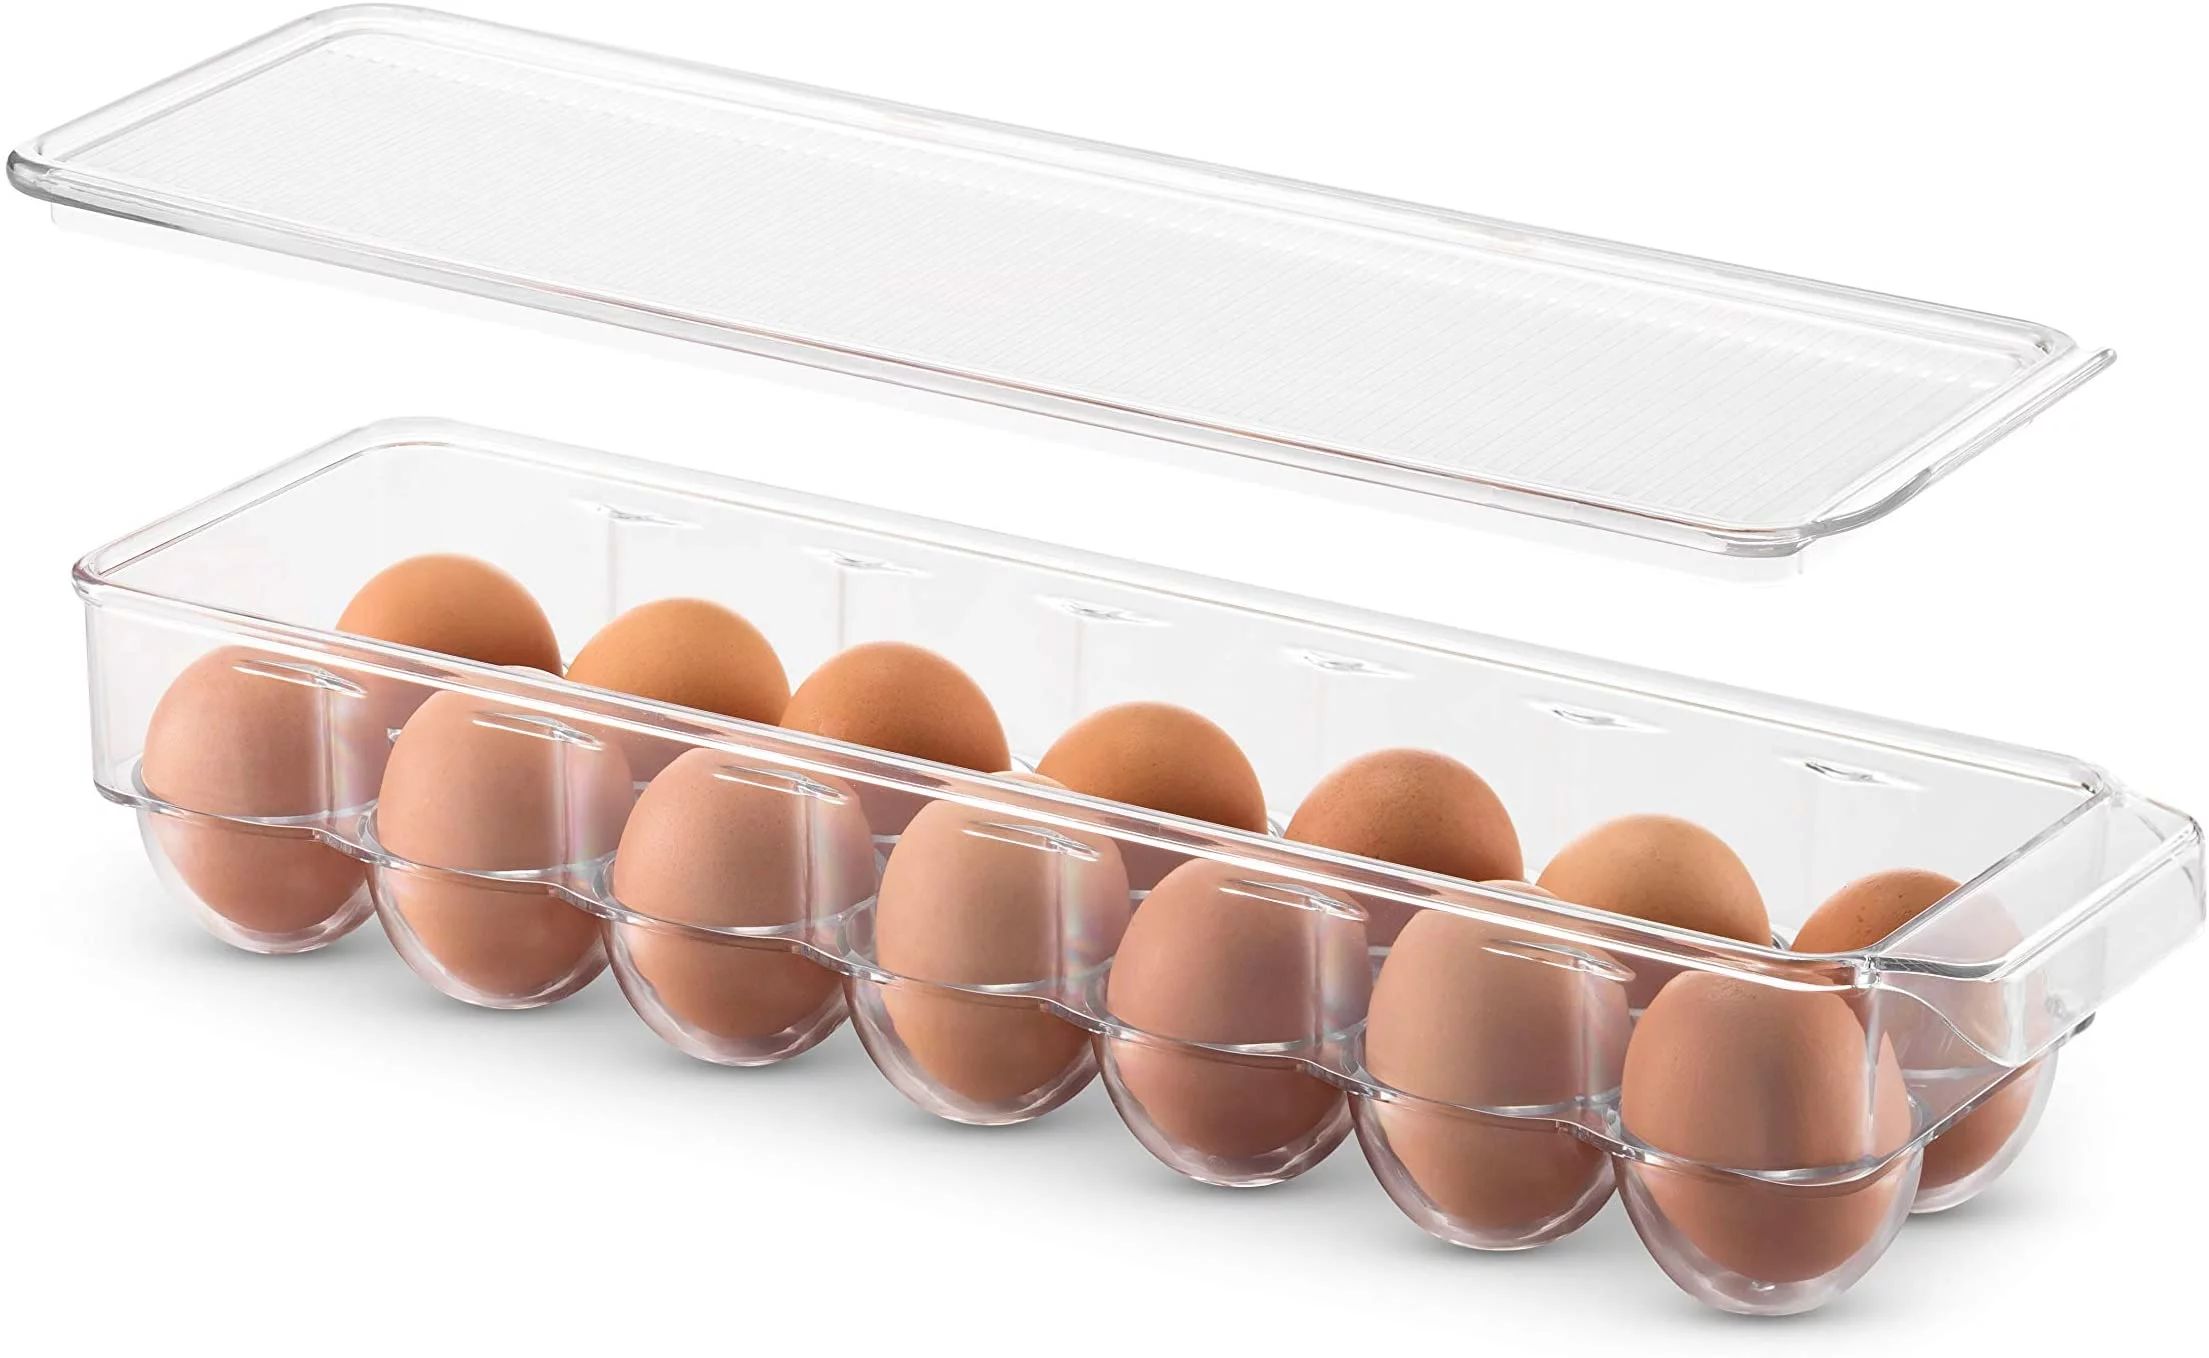 Plastic Egg Holders Stackable Refrigerator Organizer Bins - Egg Tray Holder with Lid & Handles - ... | Walmart (US)